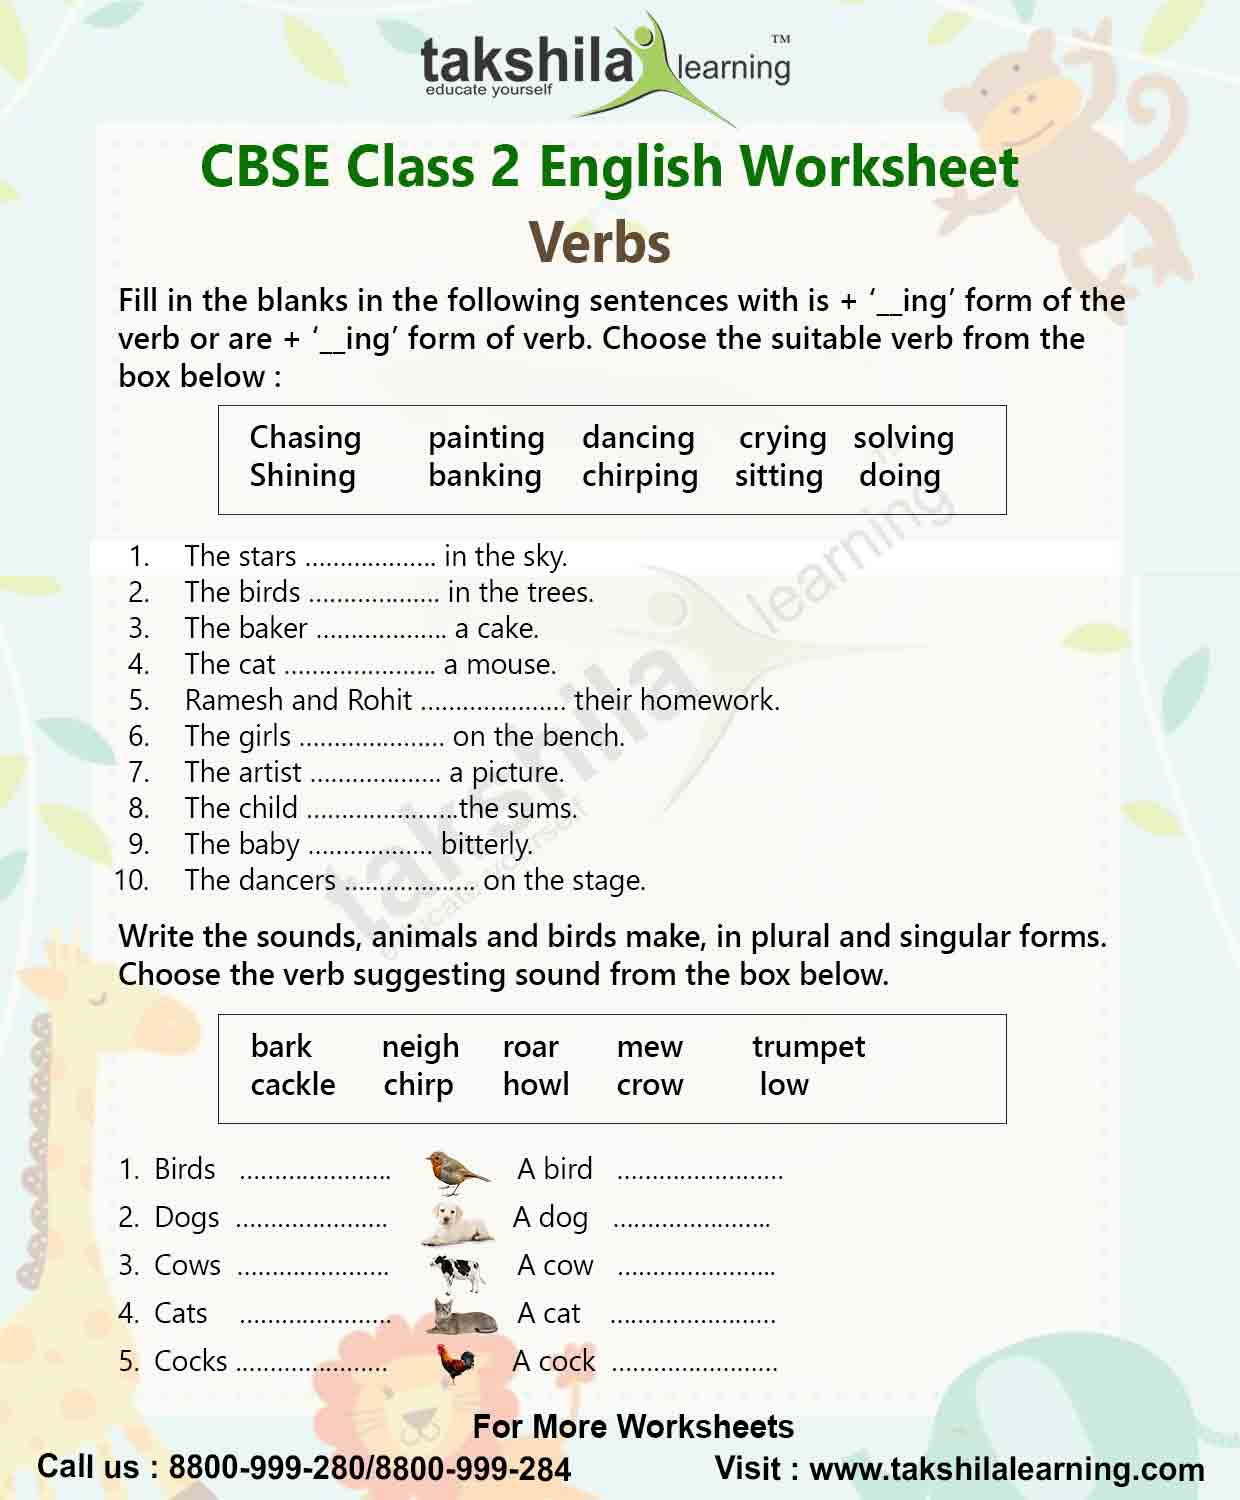 nouns-interactive-worksheet-for-grade-4-4th-grade-grammar-unit-4-pract-act-worksheet-ahmad-burns